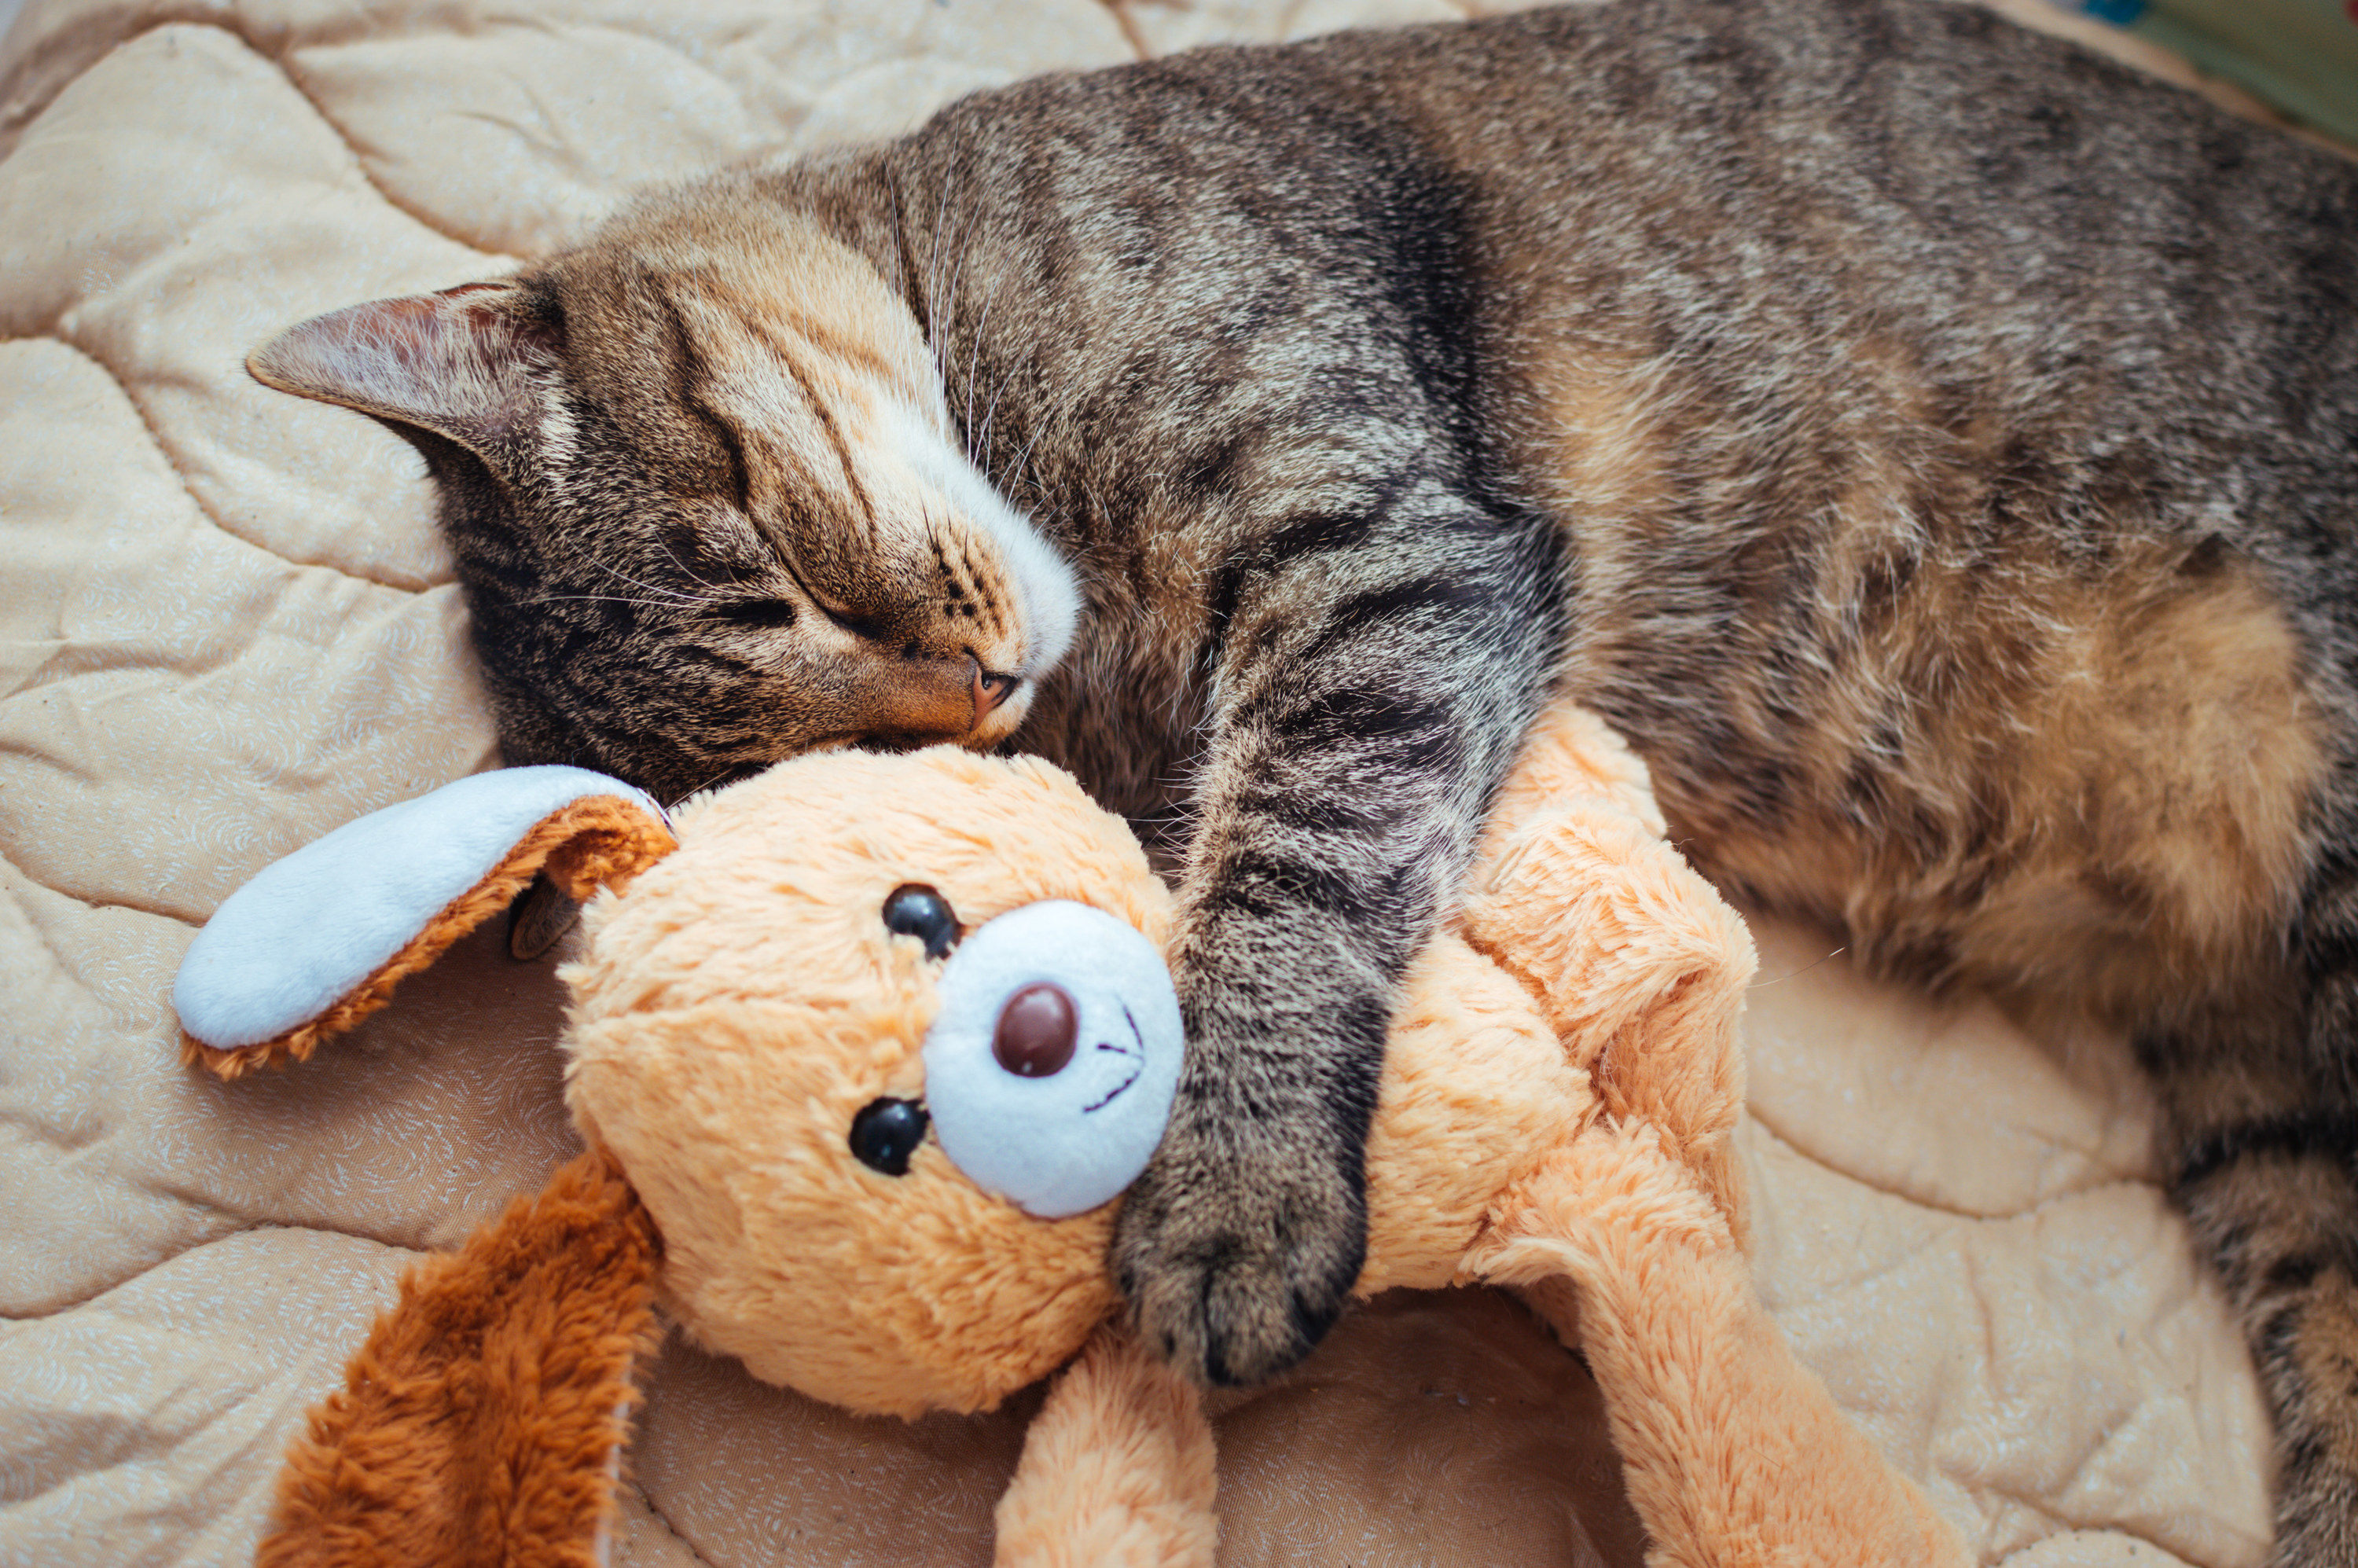 a cat cuddling a stuffed animal and sleeping